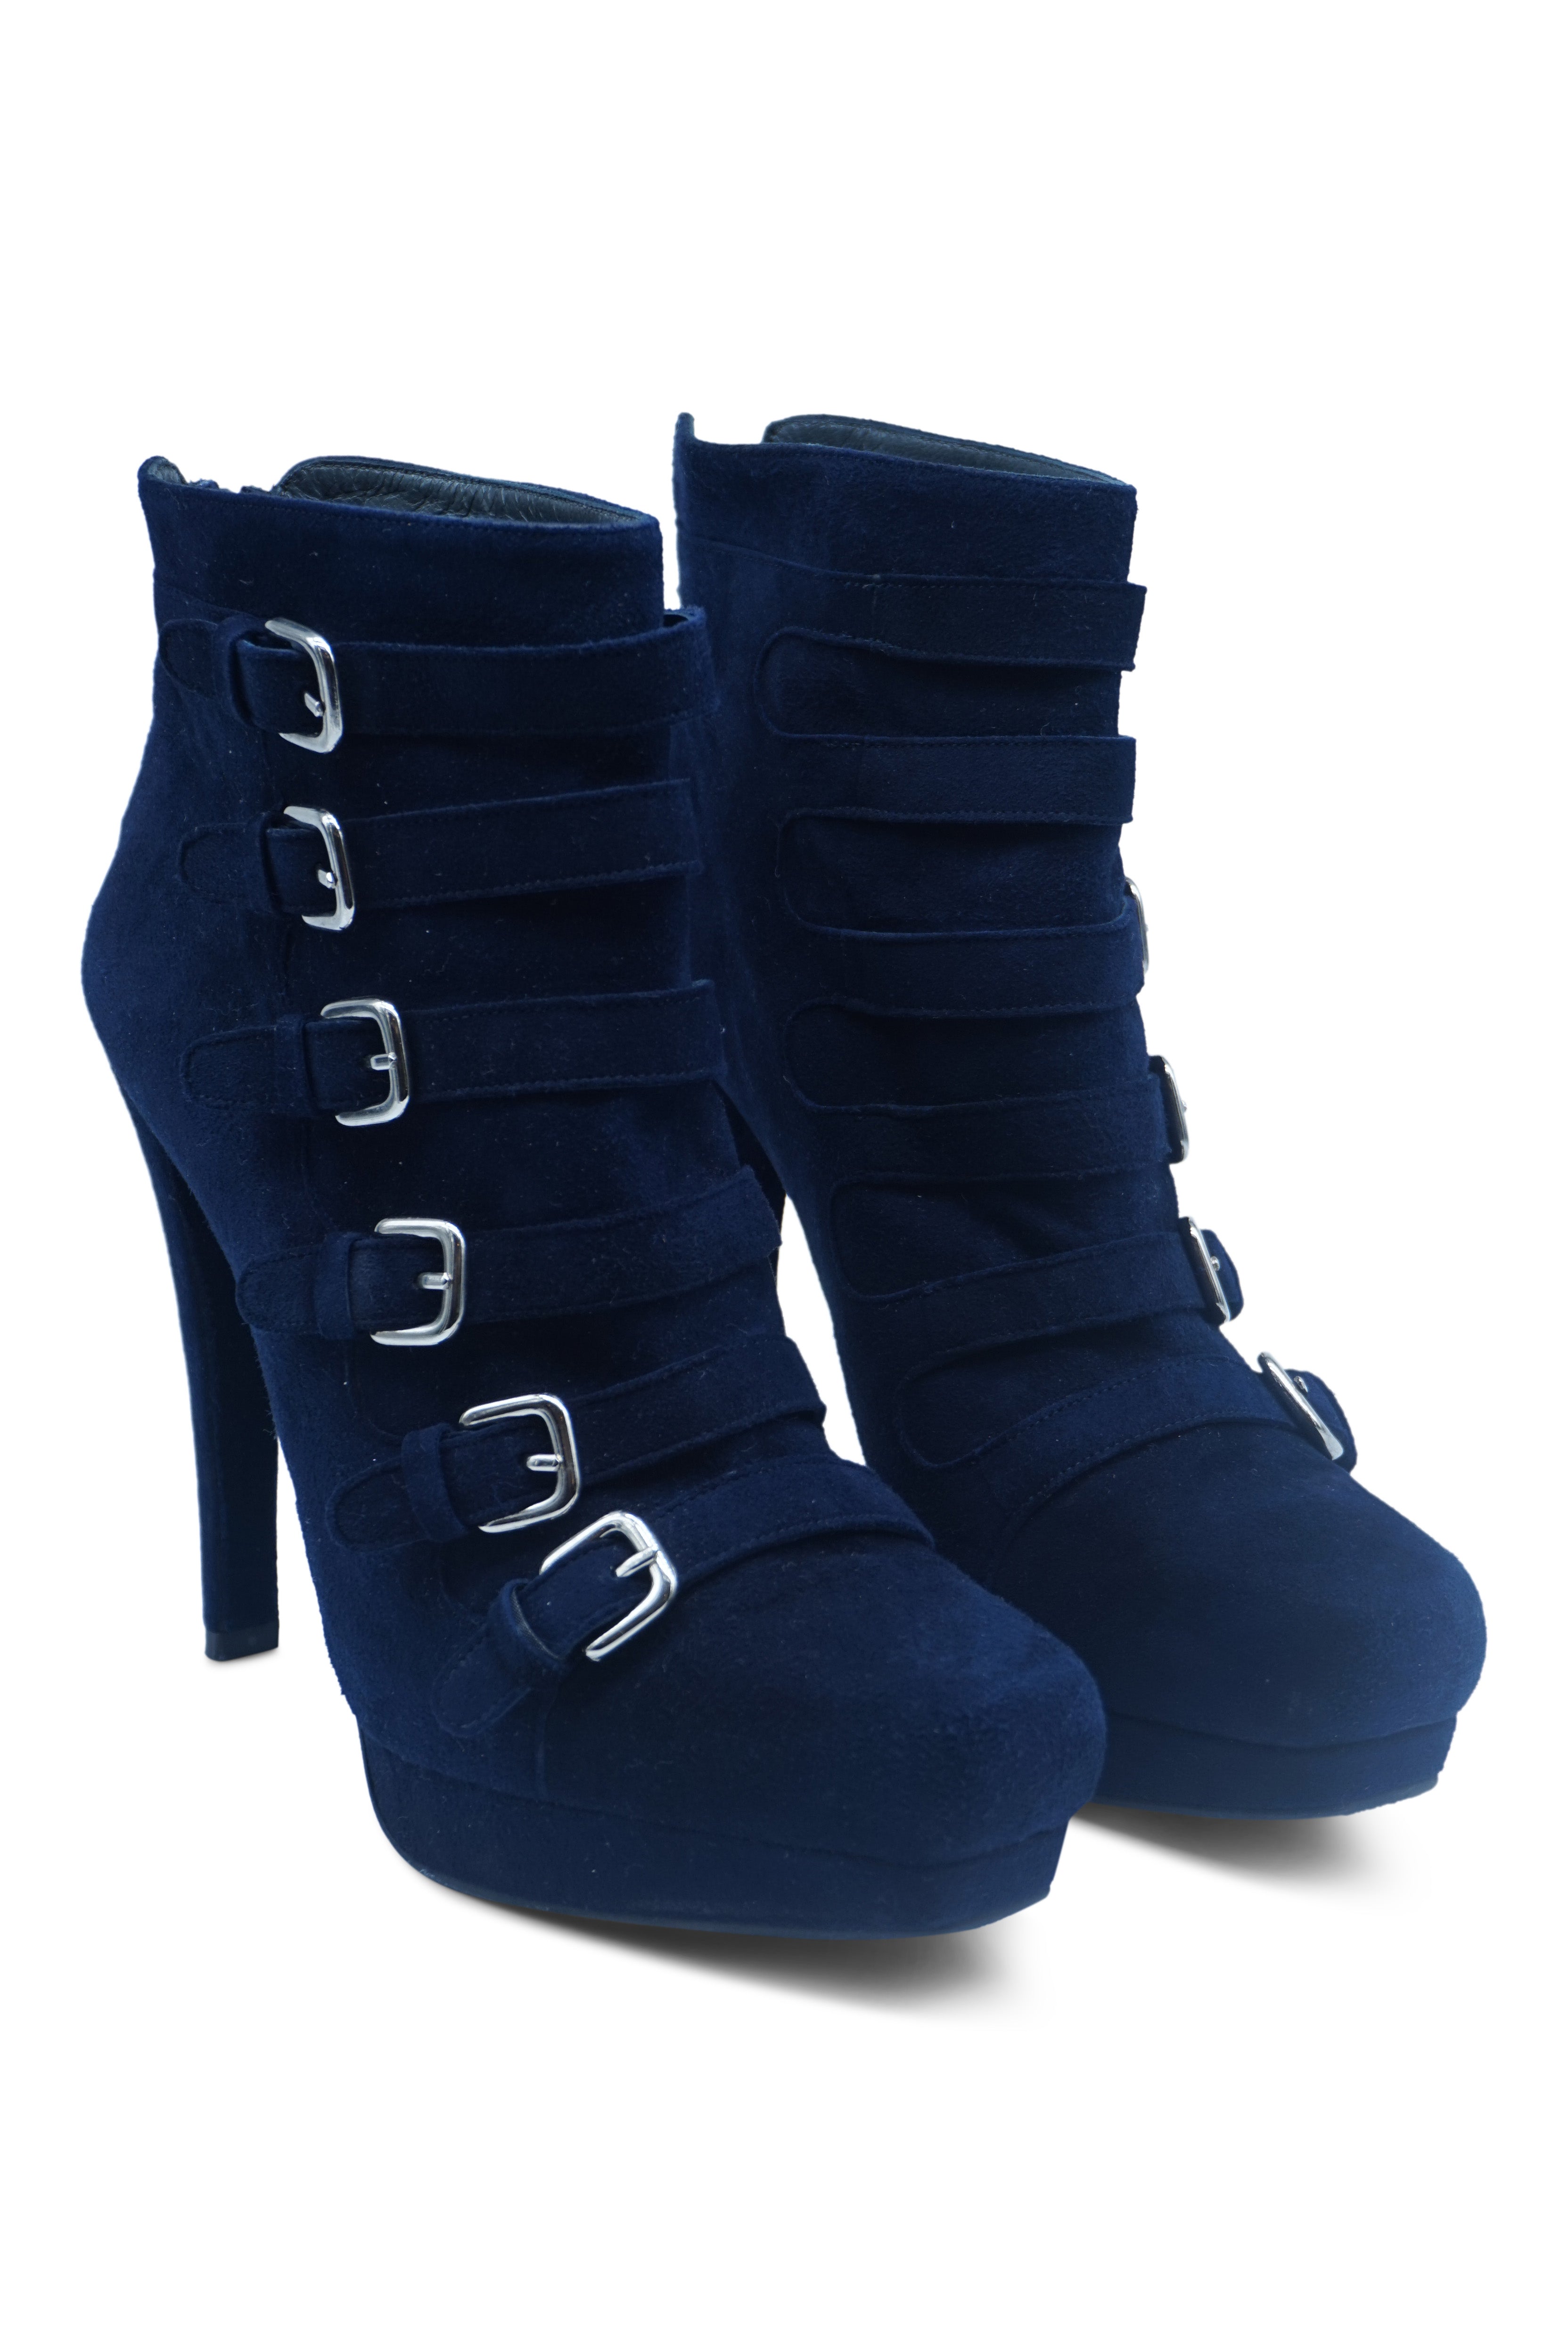 stuart weitzman blue suede boots